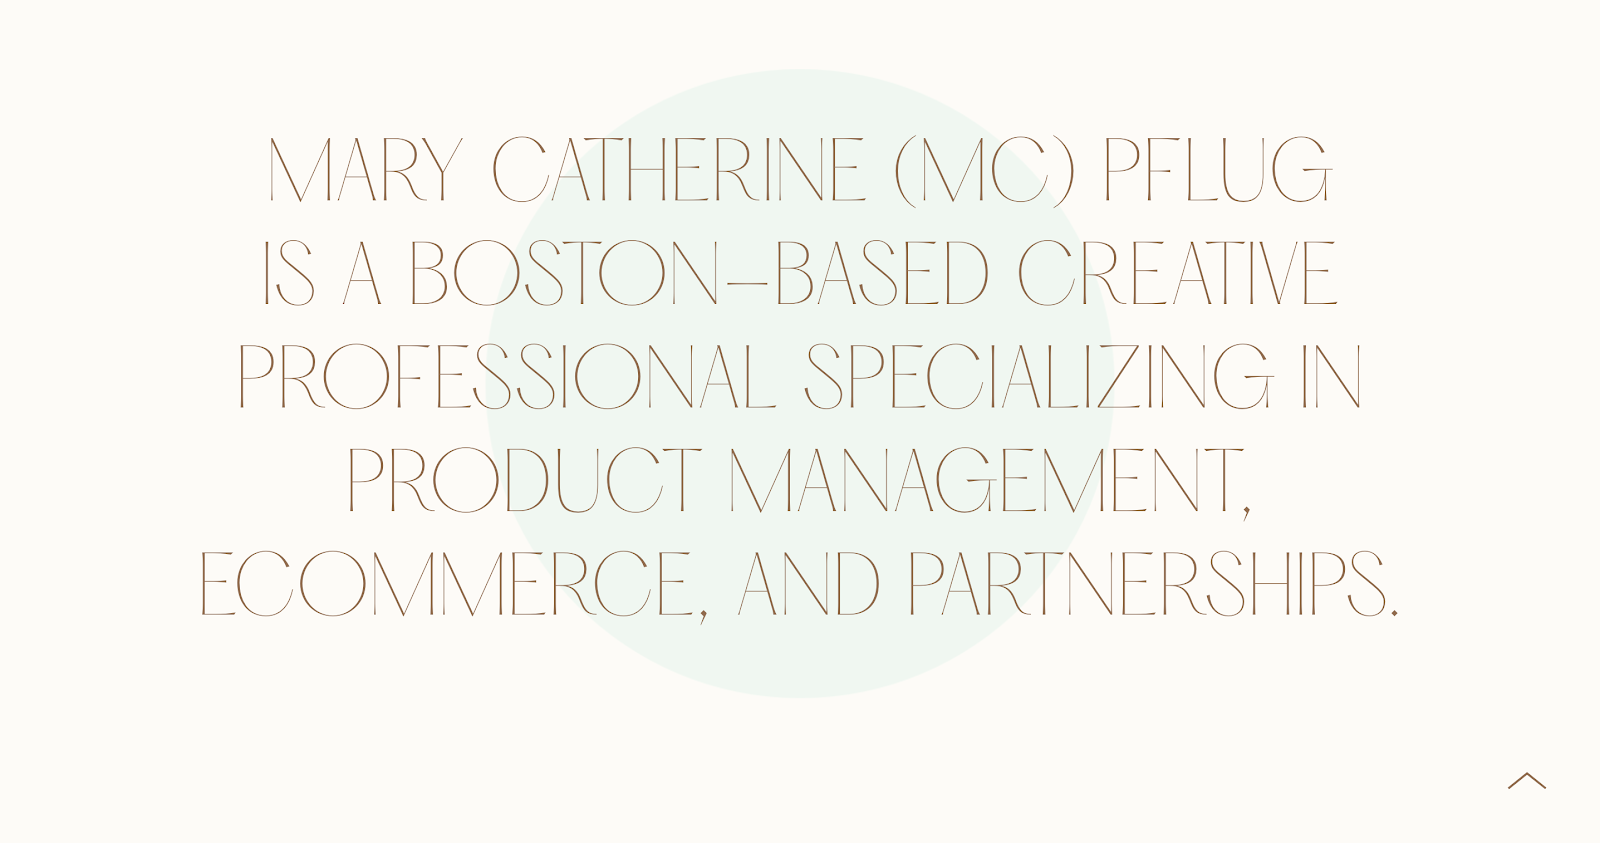 Mary Catherine (MC) Pflug is a Boston-based creative professional specializing in product management, ecommerce, and partnerships.